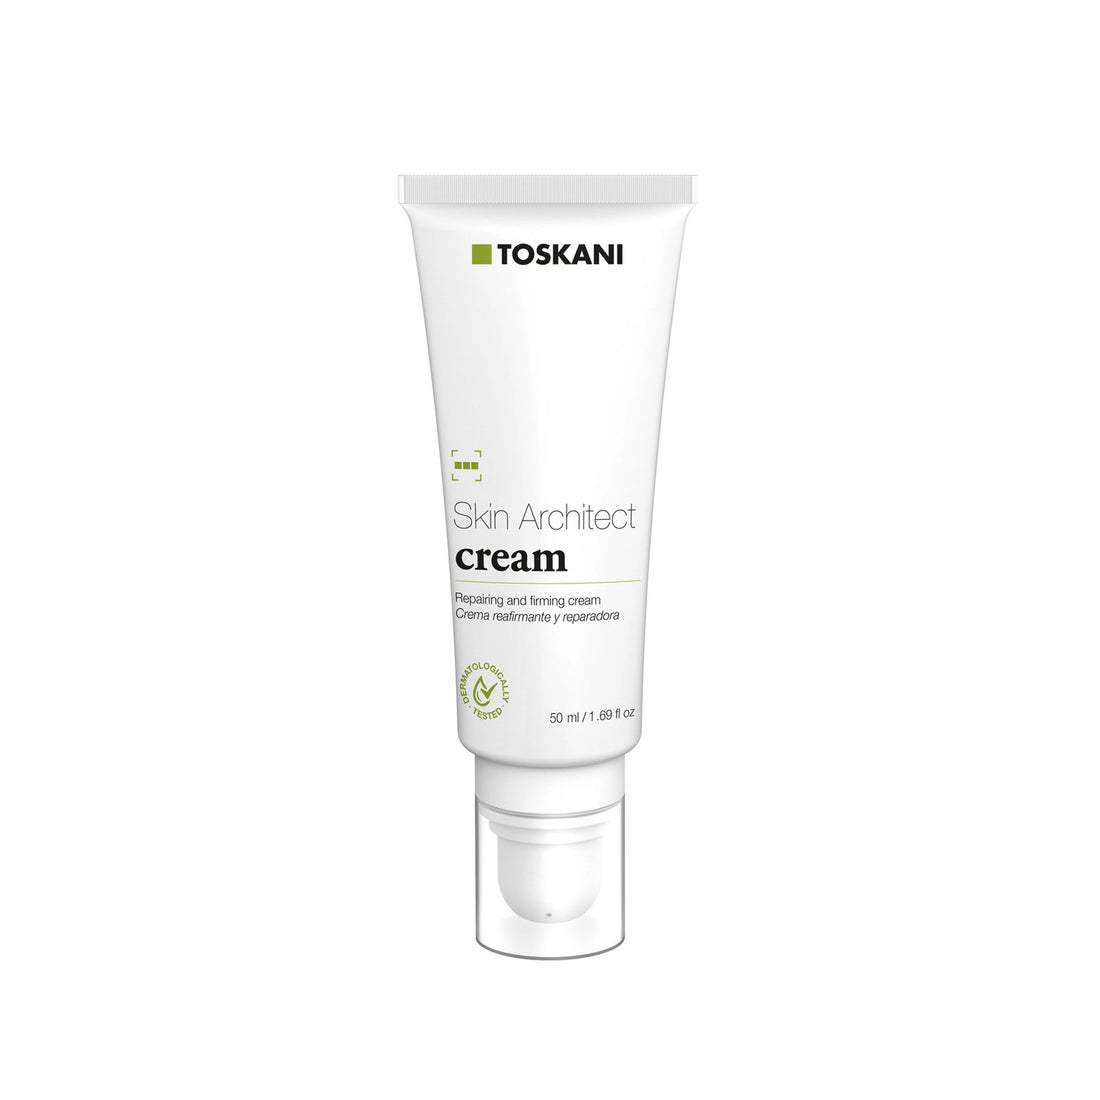 Toskani - Skin Architect Cream